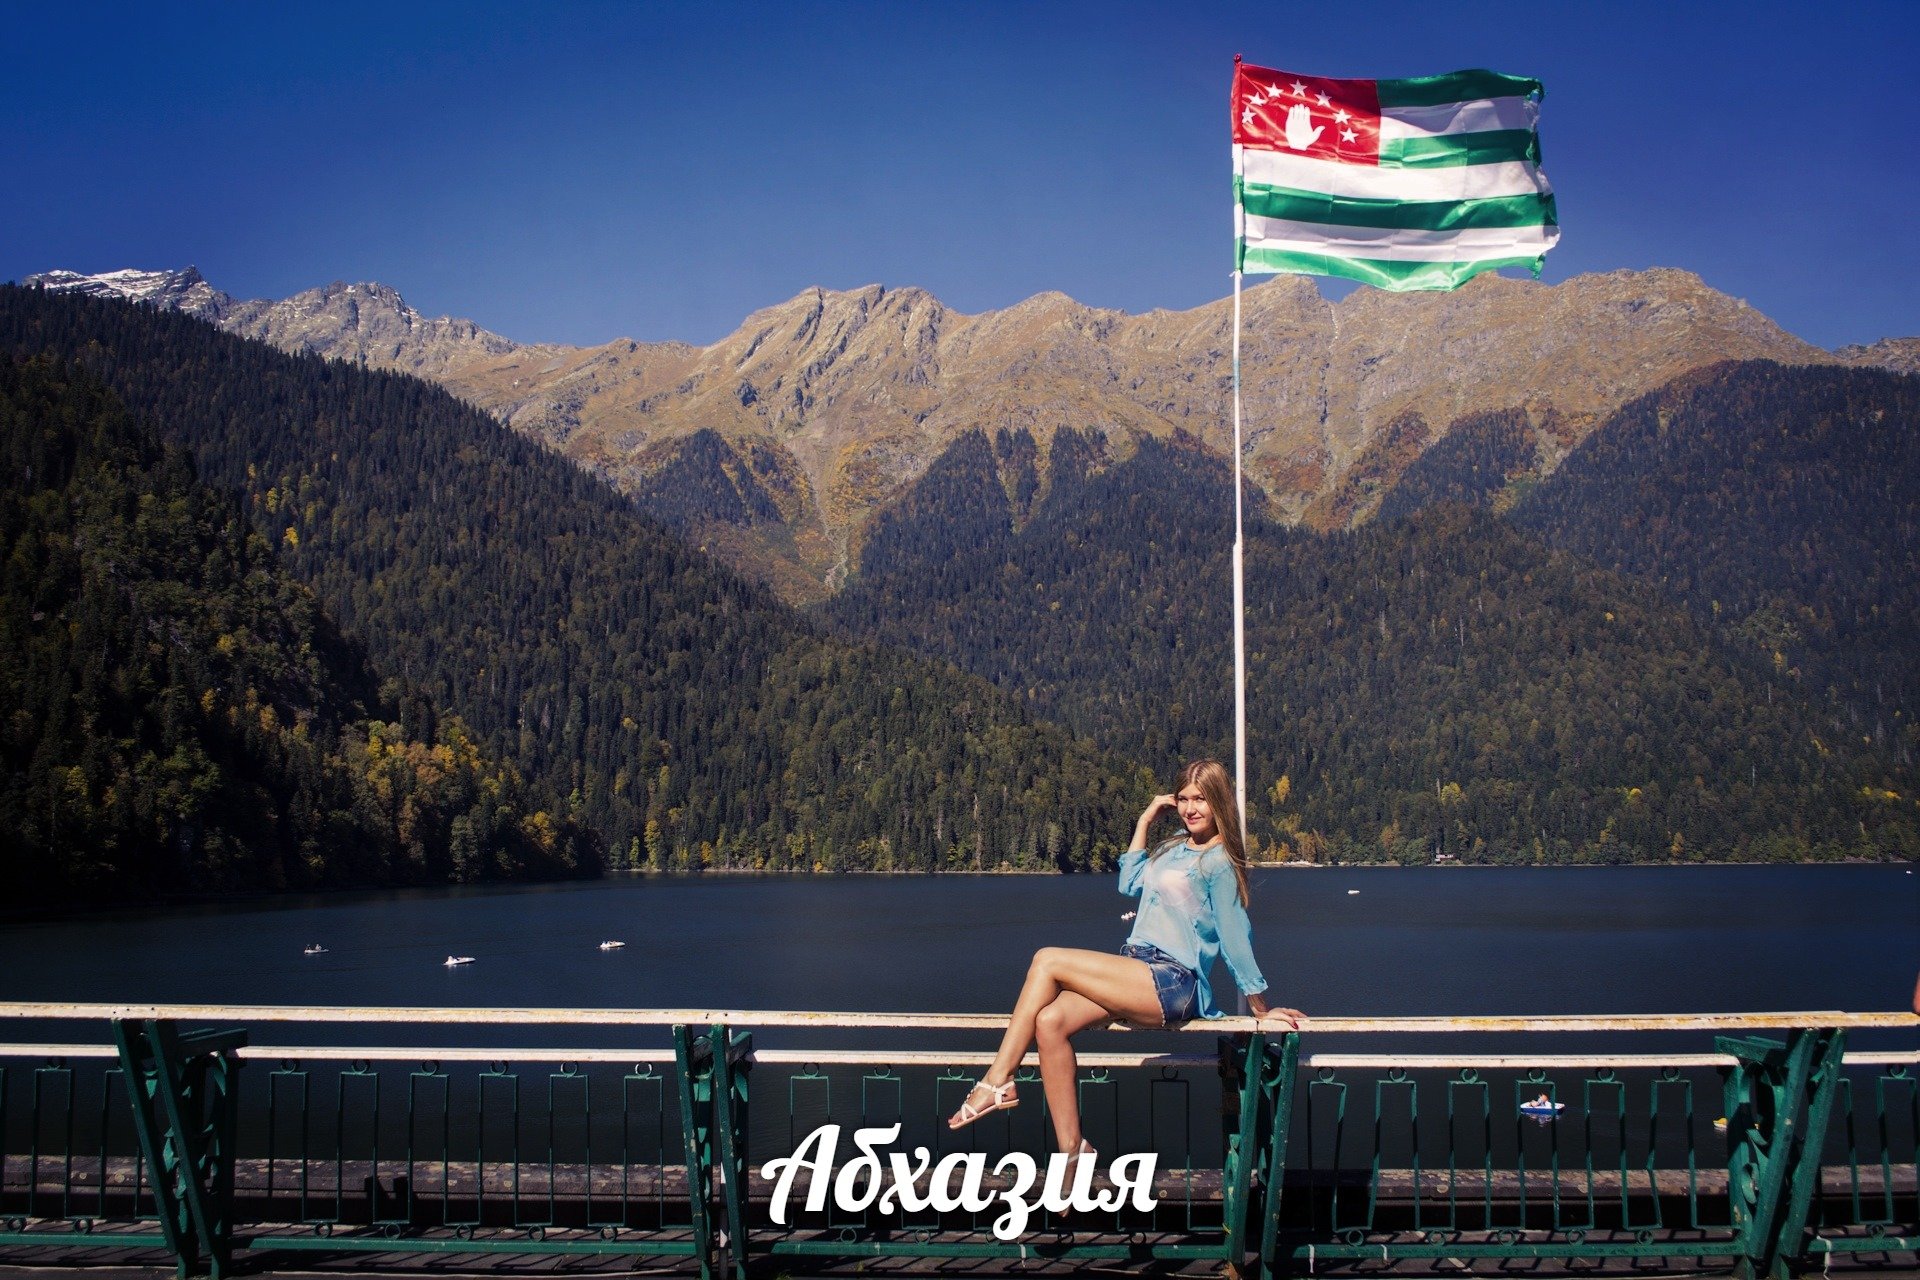 Абхазия путевка на двоих цена. Озеро Рица Абхазия. Абхазия флаг Рица. Рица с абхазским флагом. Абхазия Рица озеро туристов 2021.